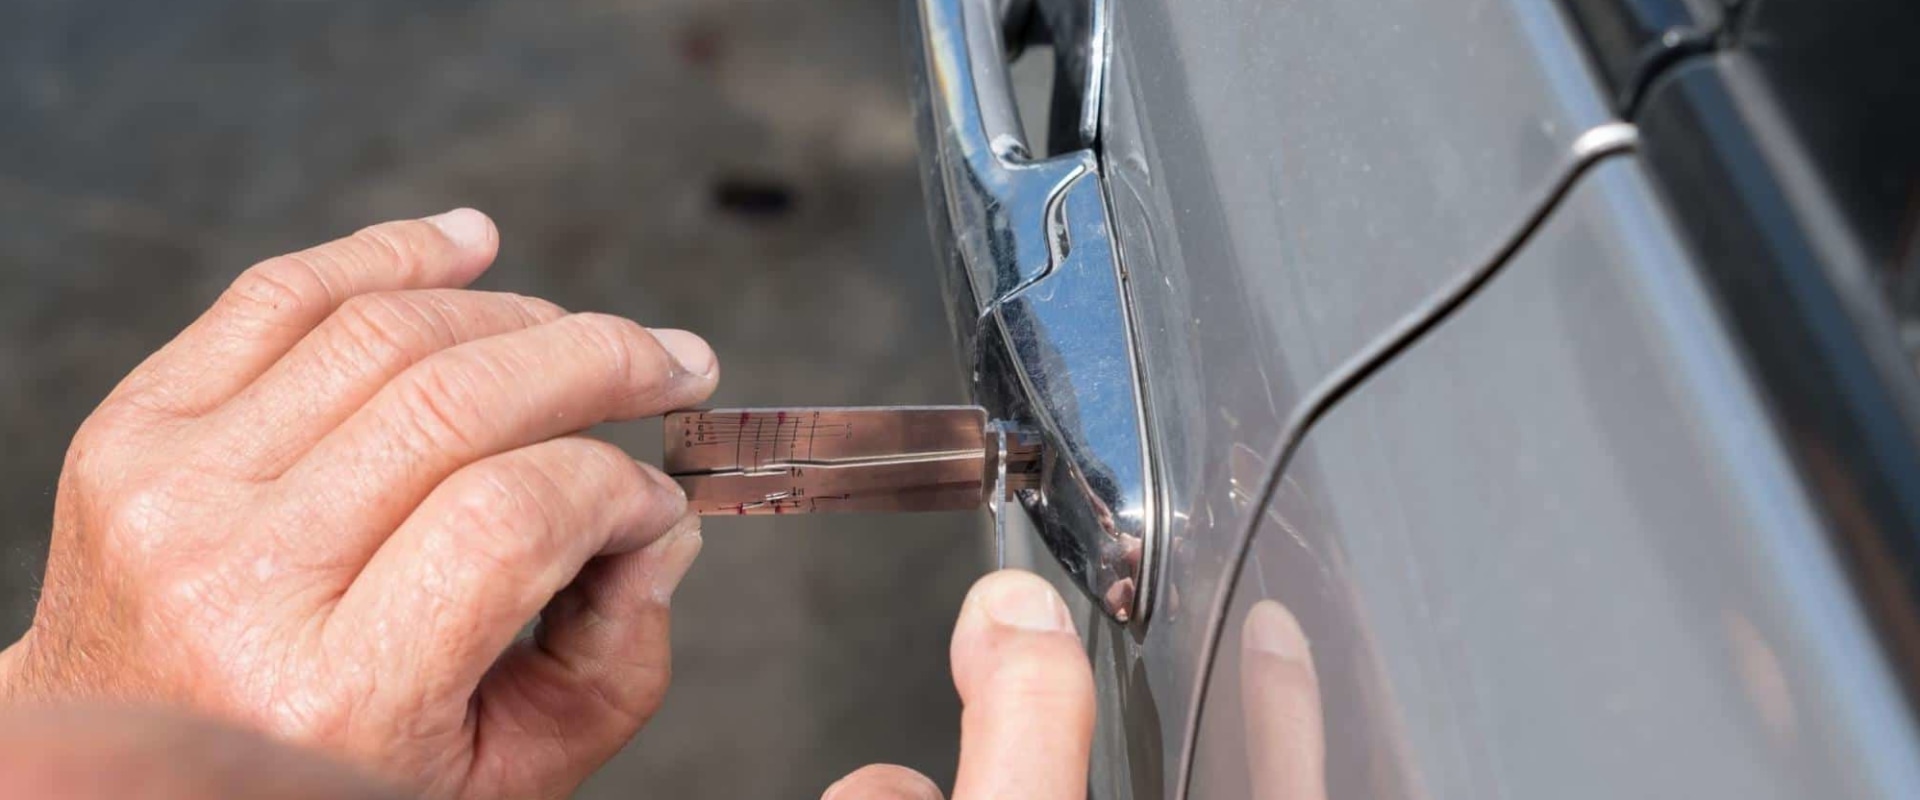 Unlocking Your Car with a Mobile Locksmith in Spokane WA